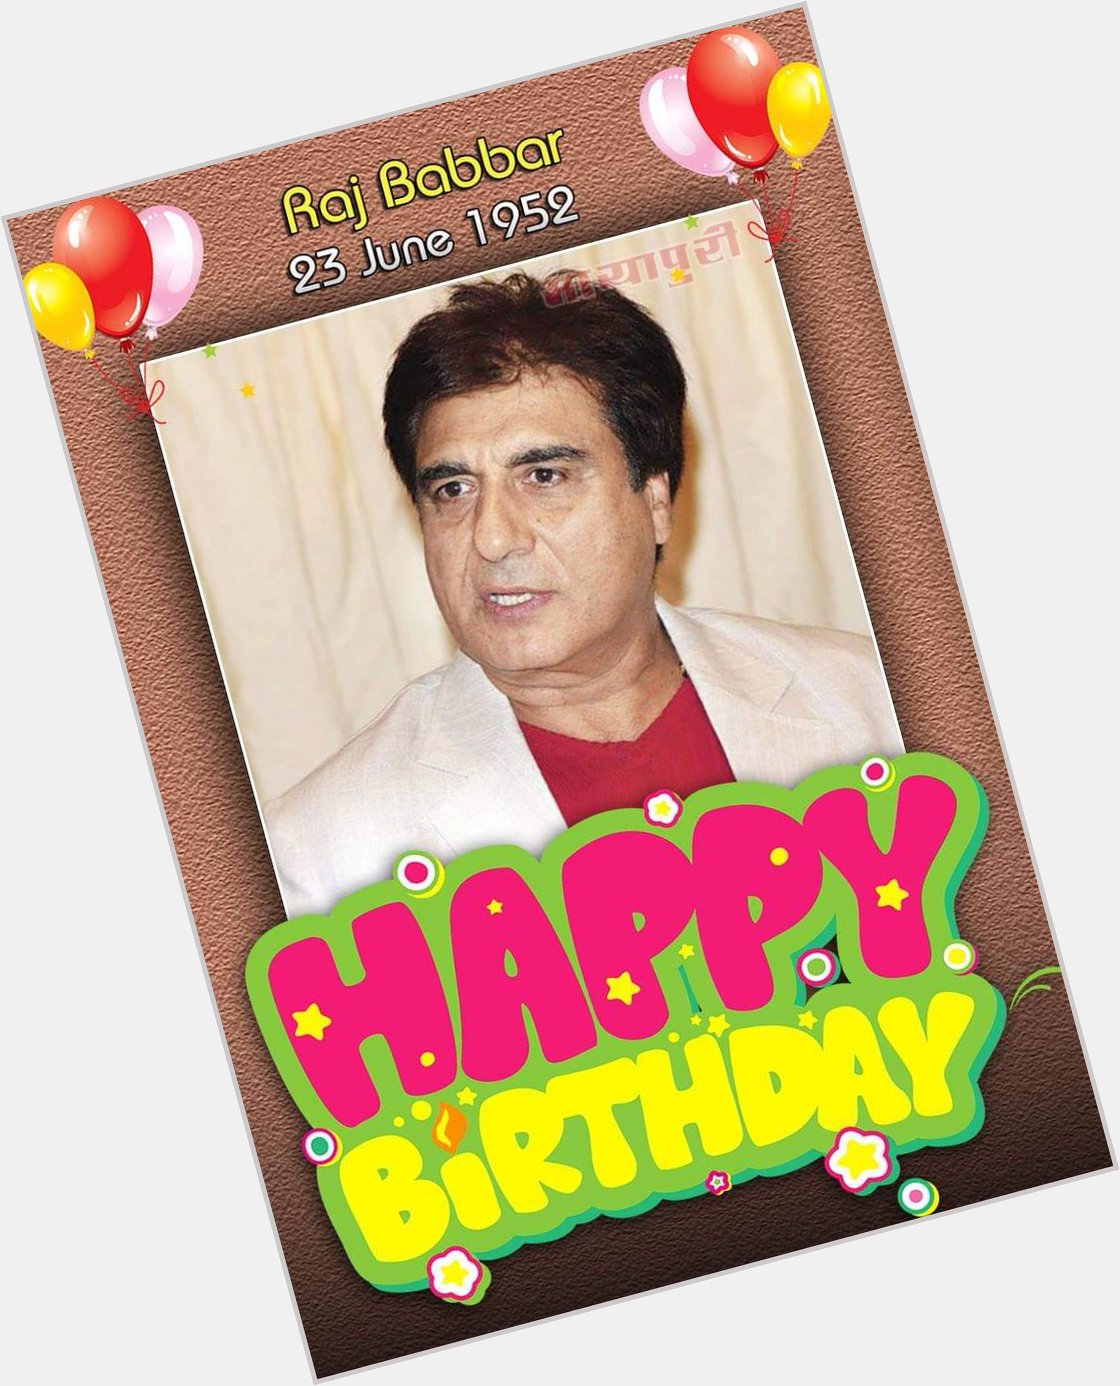  Happy birthday raj Babbar ji 
Good health and long life Allah bless you 